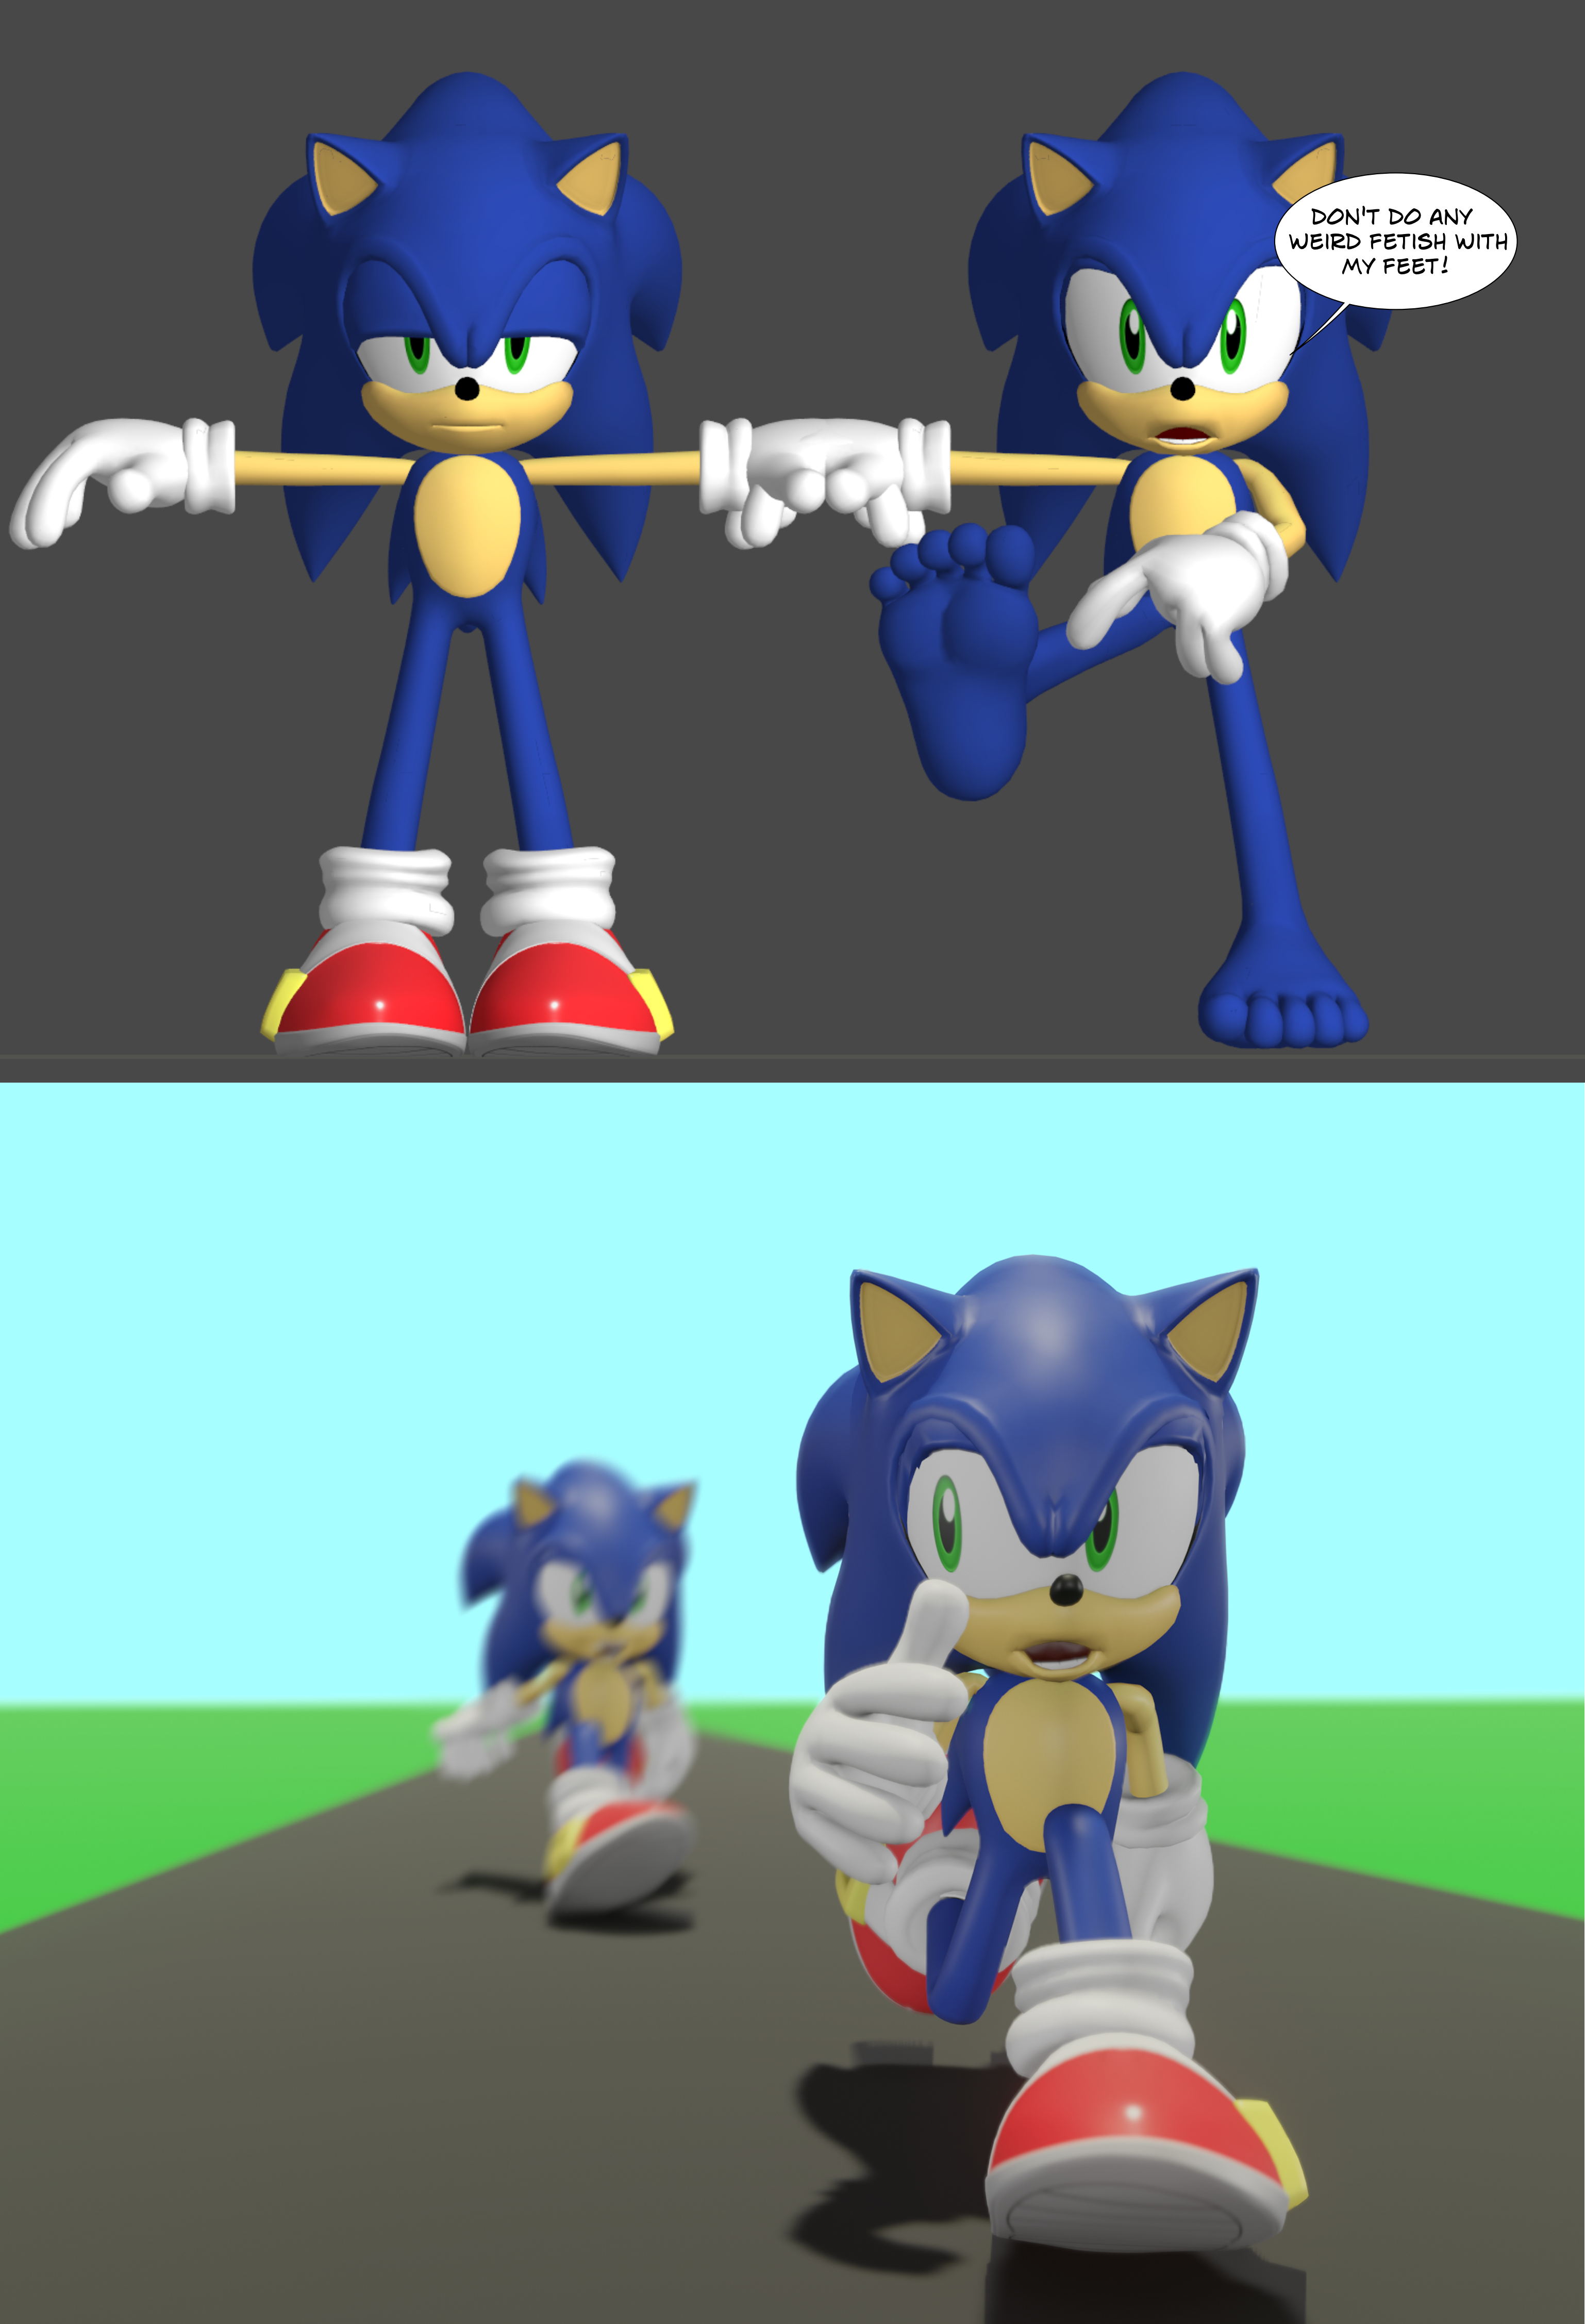 3D Model Download+ Sonic The Hedgehog by JCThornton on DeviantArt